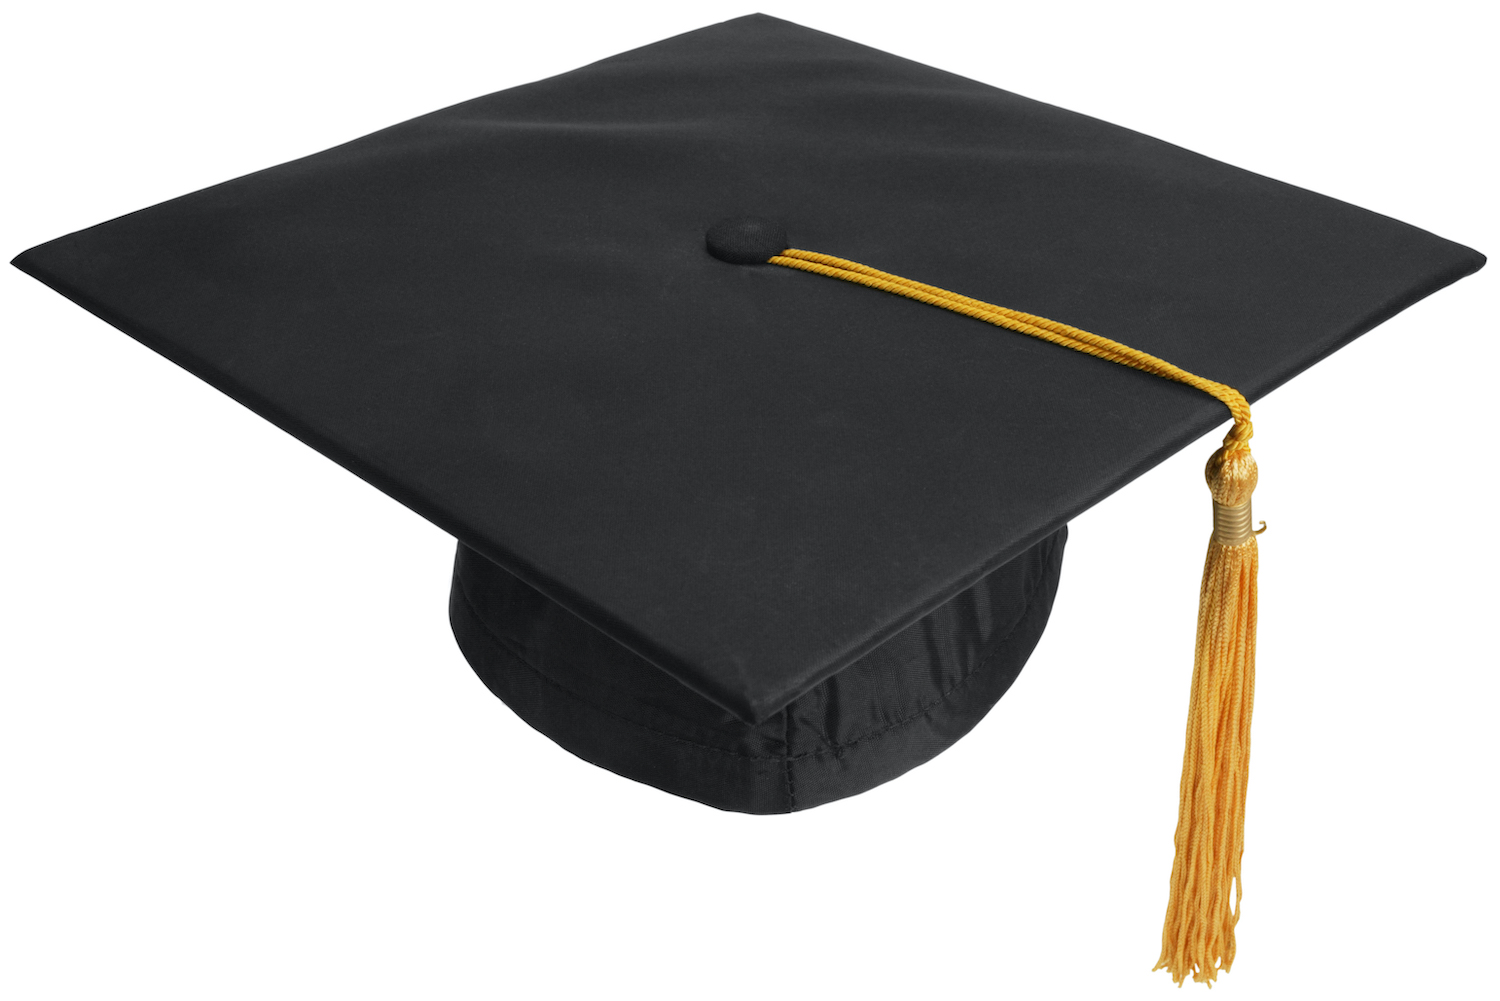 Graduation cap with tassel against white background